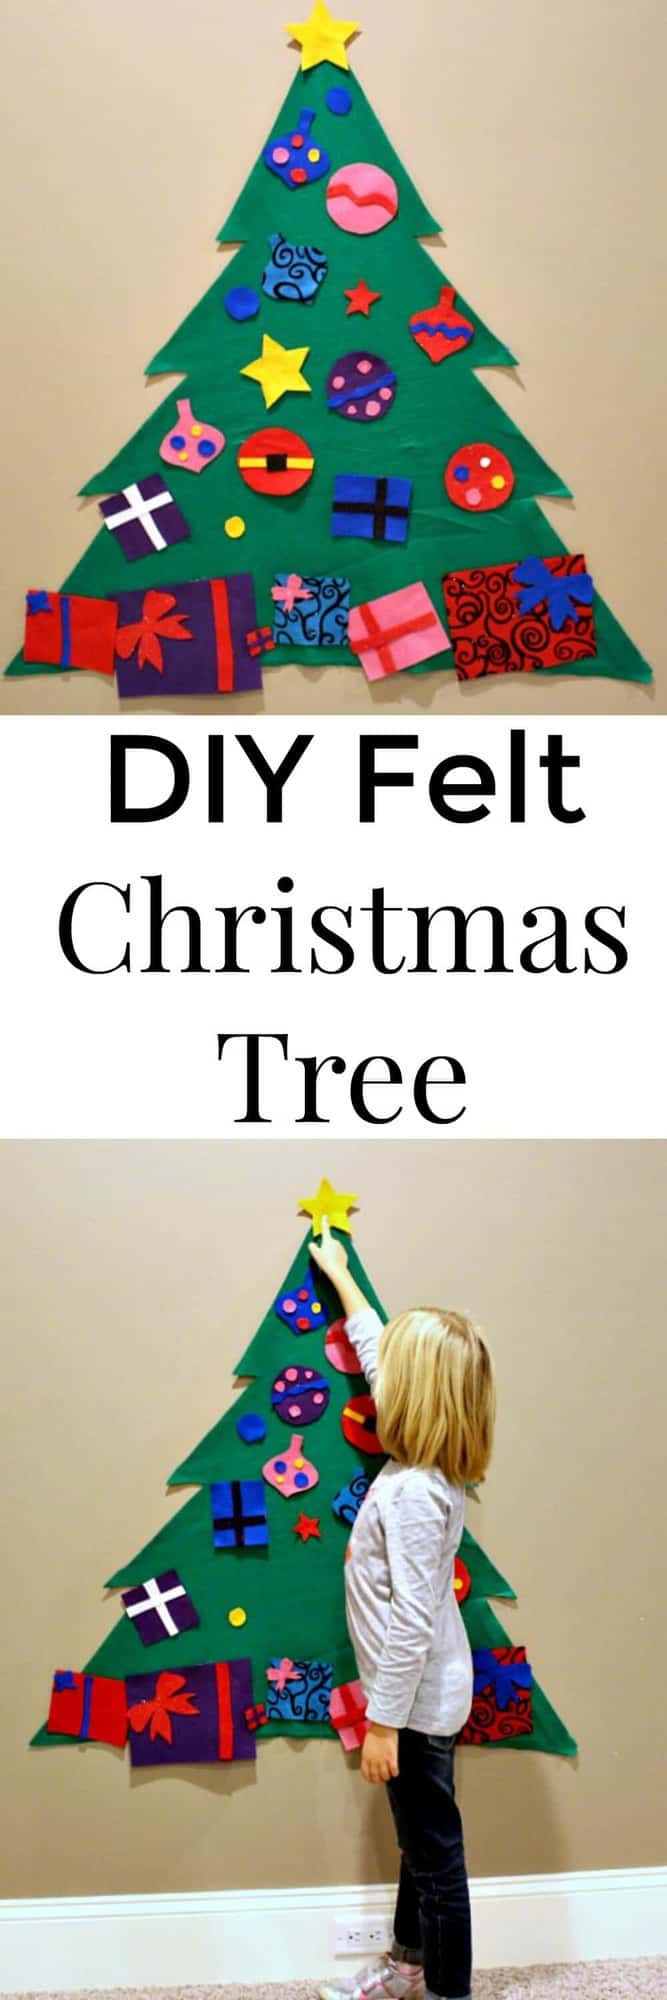 DIY Felt Christmas Tree
 Totally Cool Christmas Tree Decorating Ideas That Will